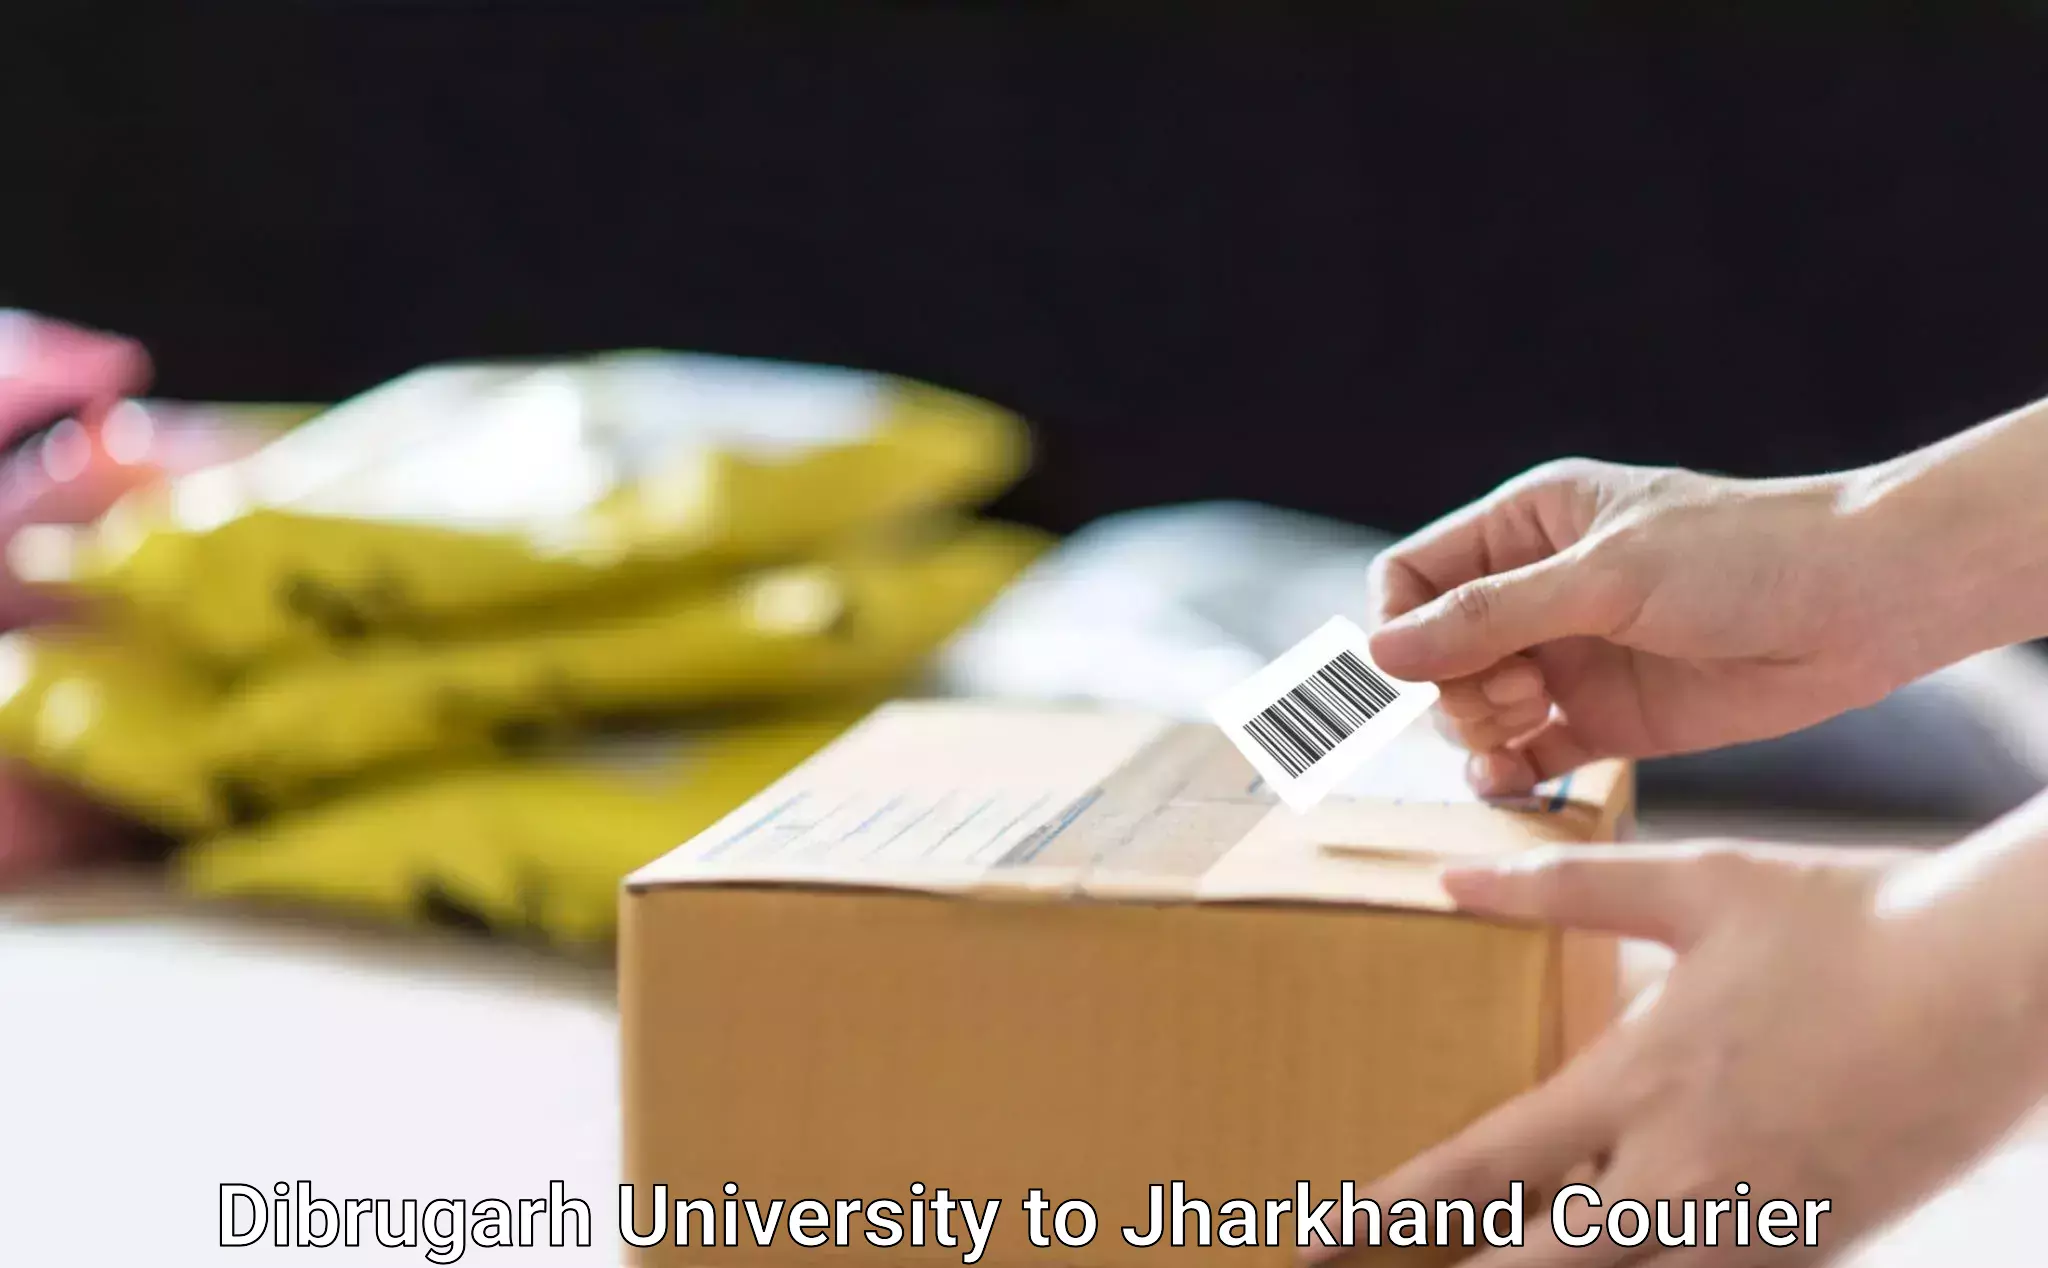 Efficient cargo handling in Dibrugarh University to Jharkhand